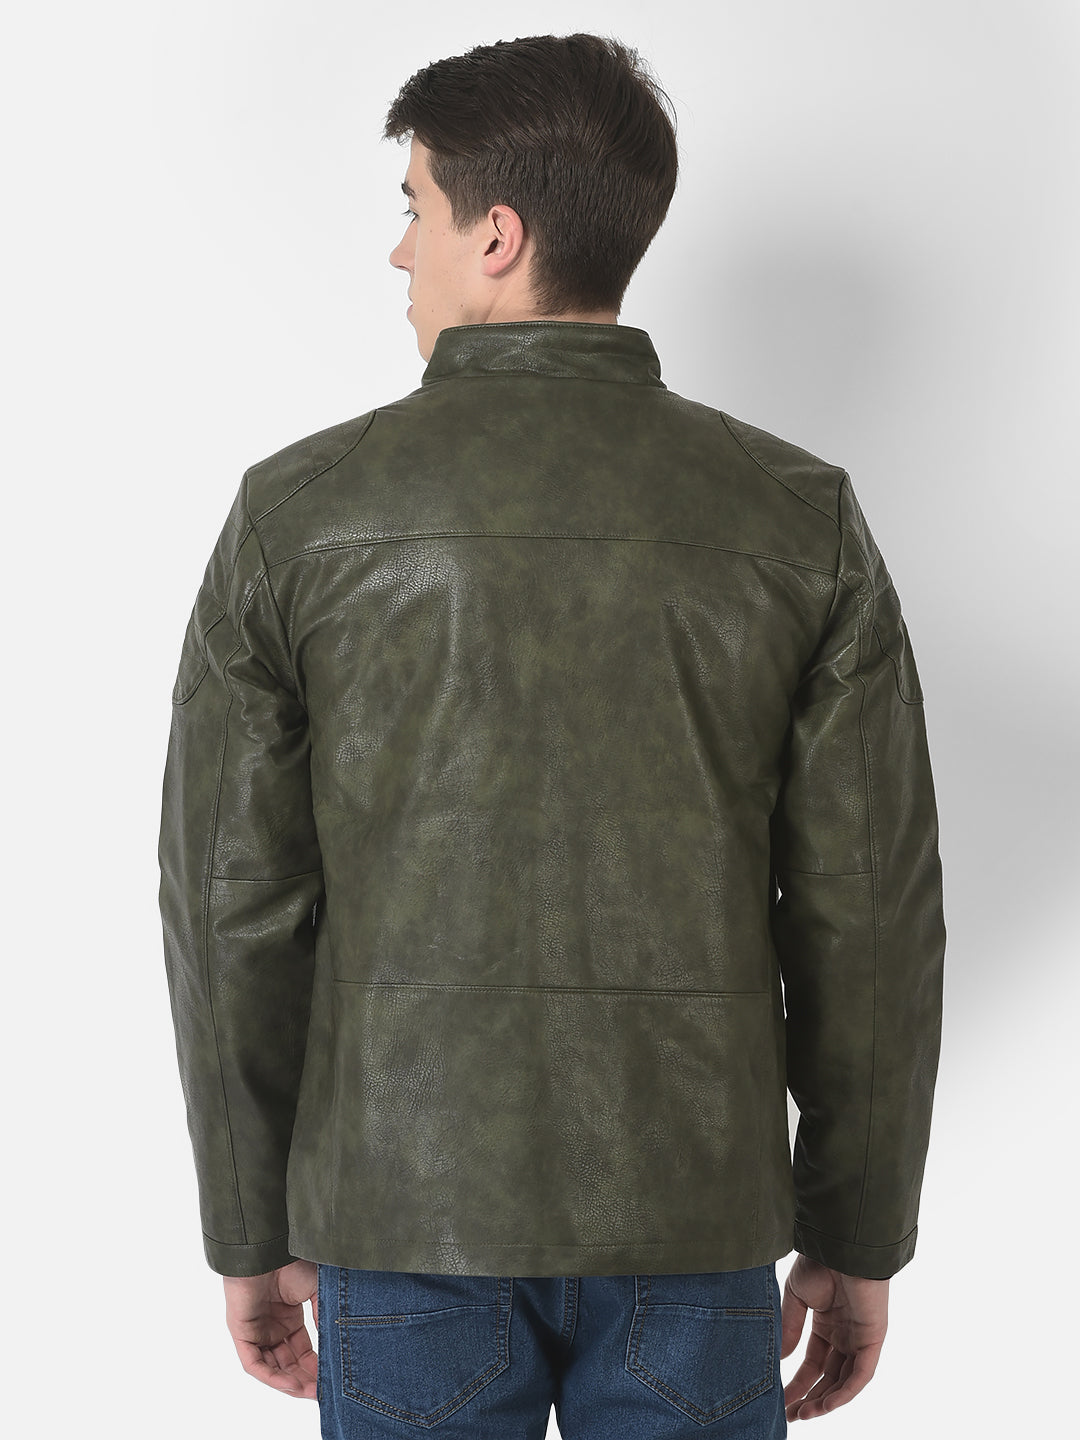  Olive Green Leather Jacket